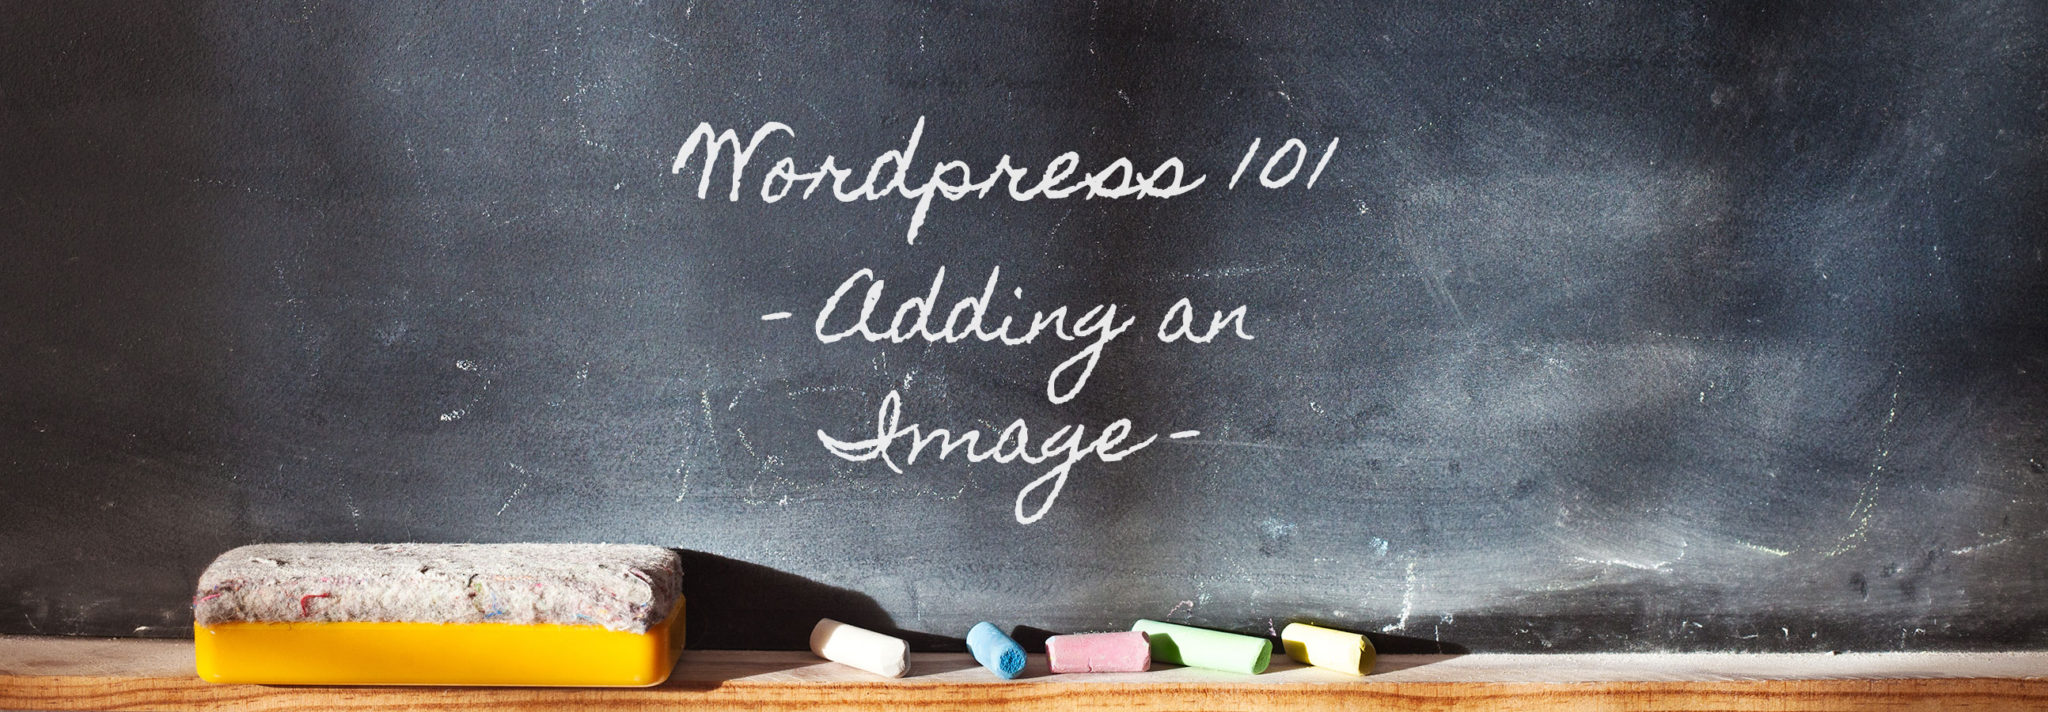 WordPress 101 - Adding an Image